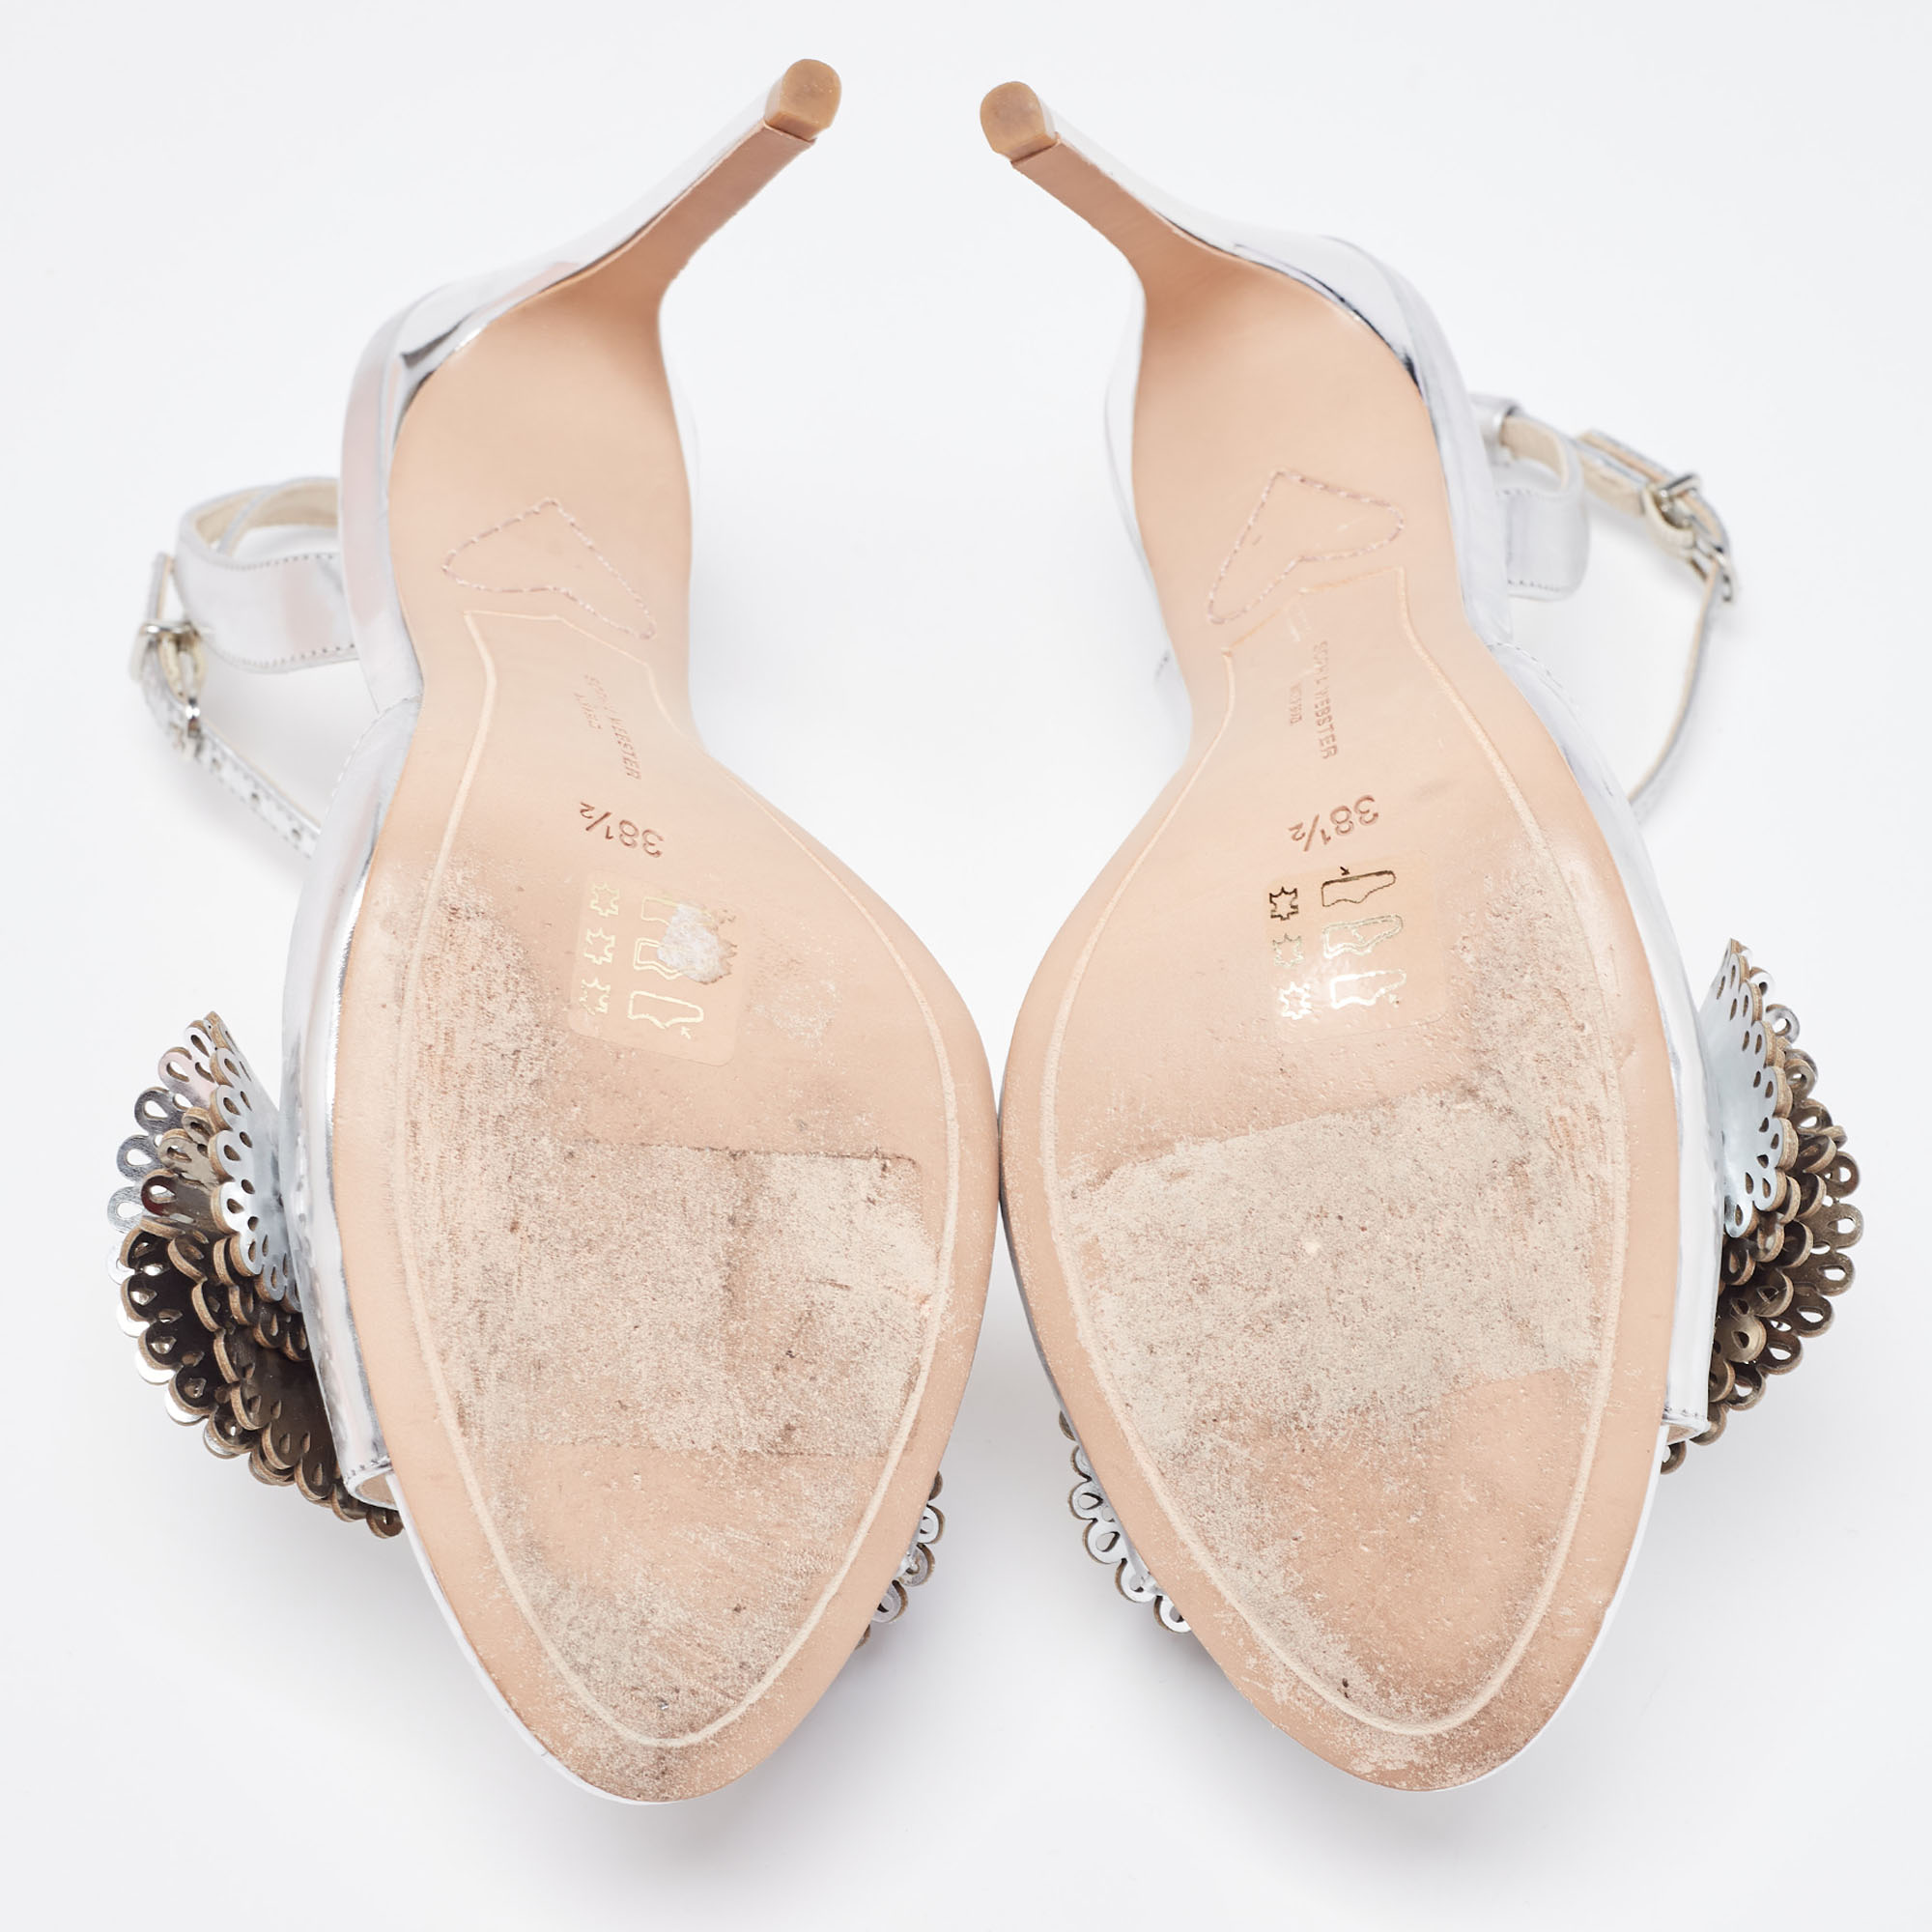 Sophia Webster Silver Foil Leather Lilico Floral Ankle Wrap Sandals Size 38.5